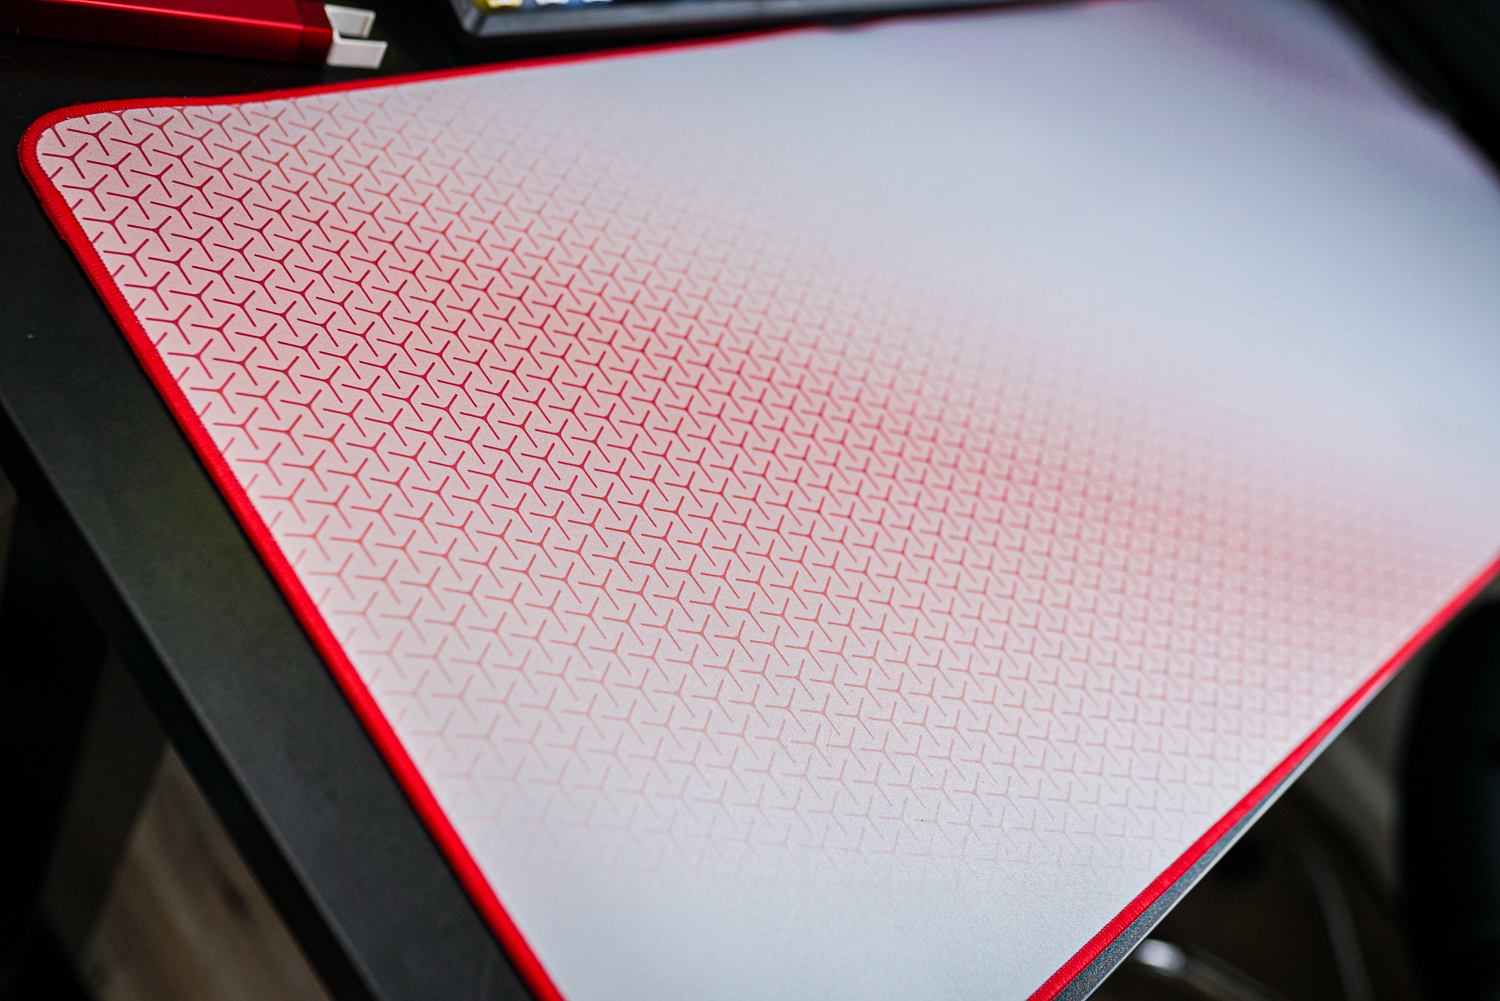 Gradient pattern on Corsair's desk mat.